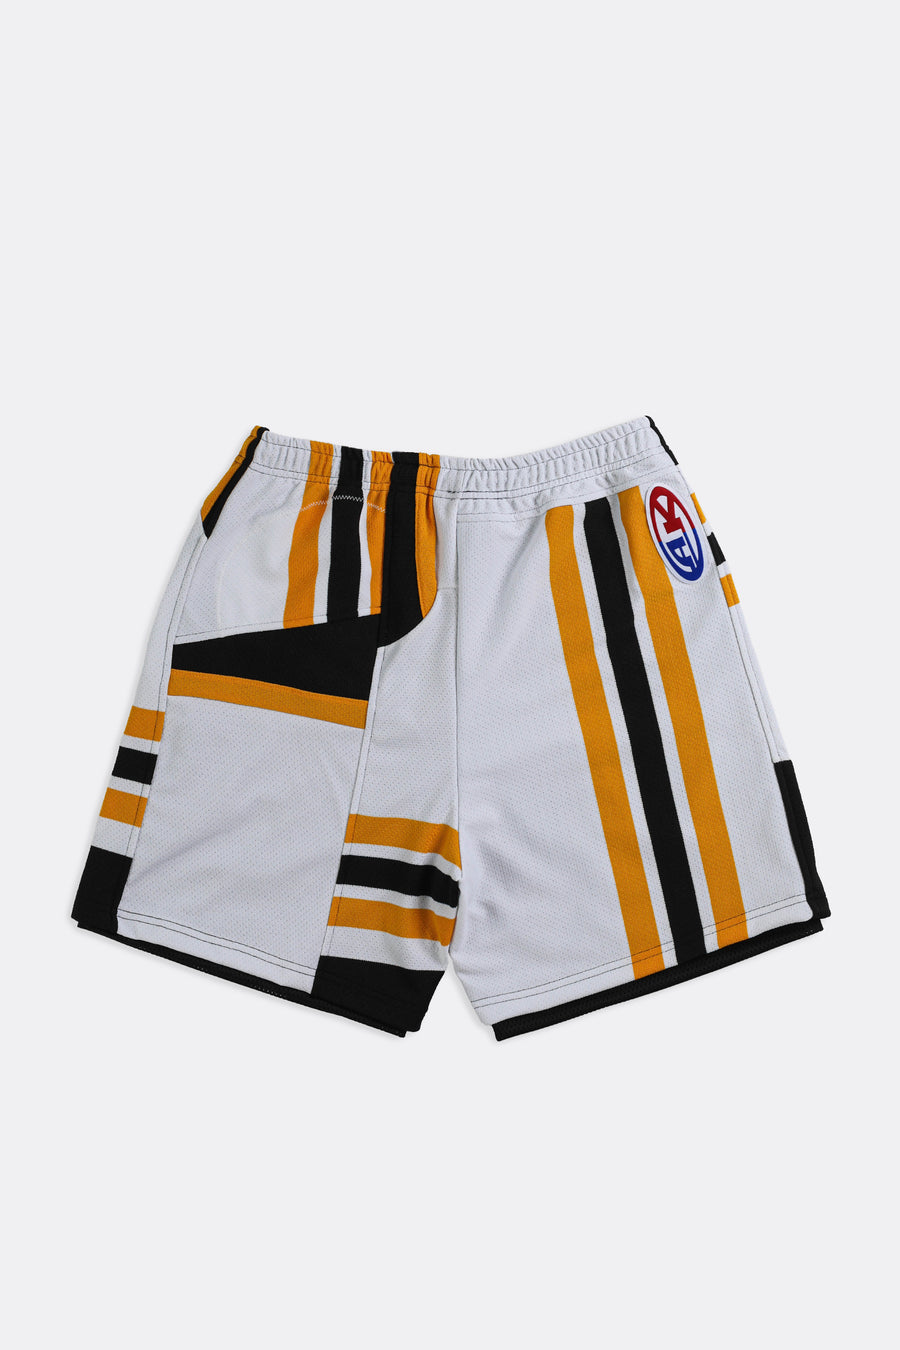 Unisex Rework Bruins NHL Jersey Shorts - Women-L, Men -M